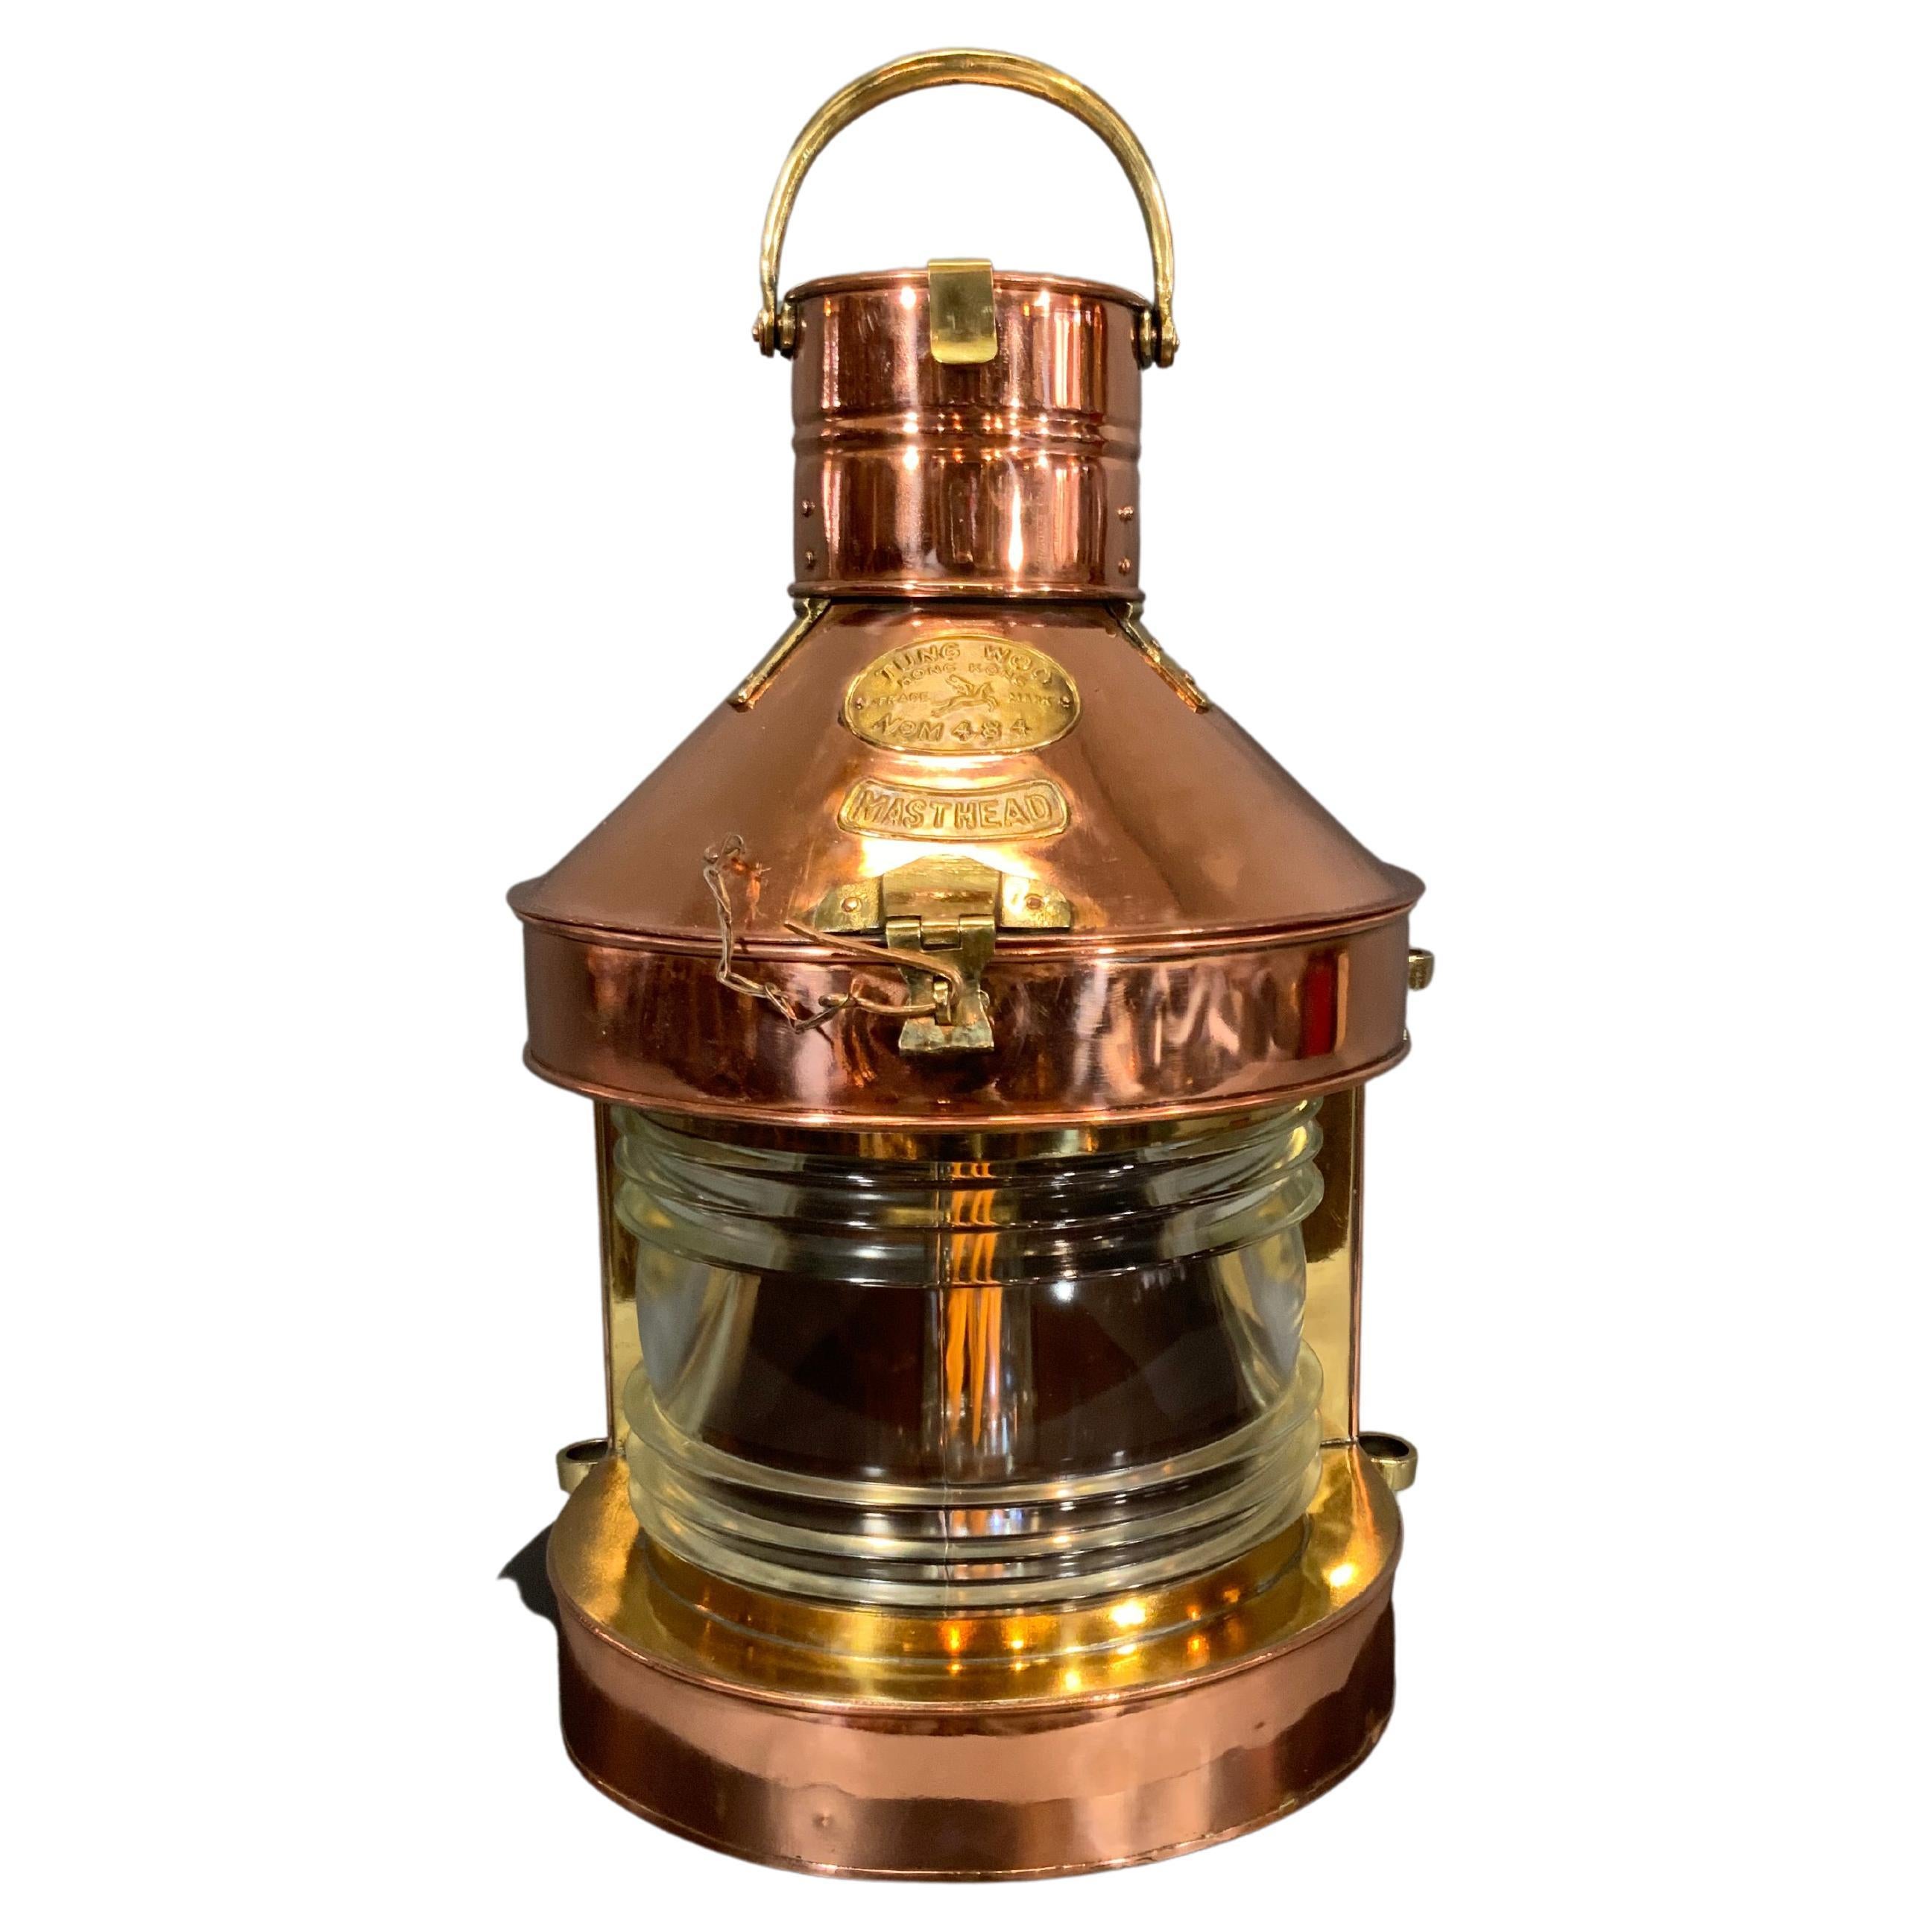 Copper Ship's Masthead Lantern by Tung Woo